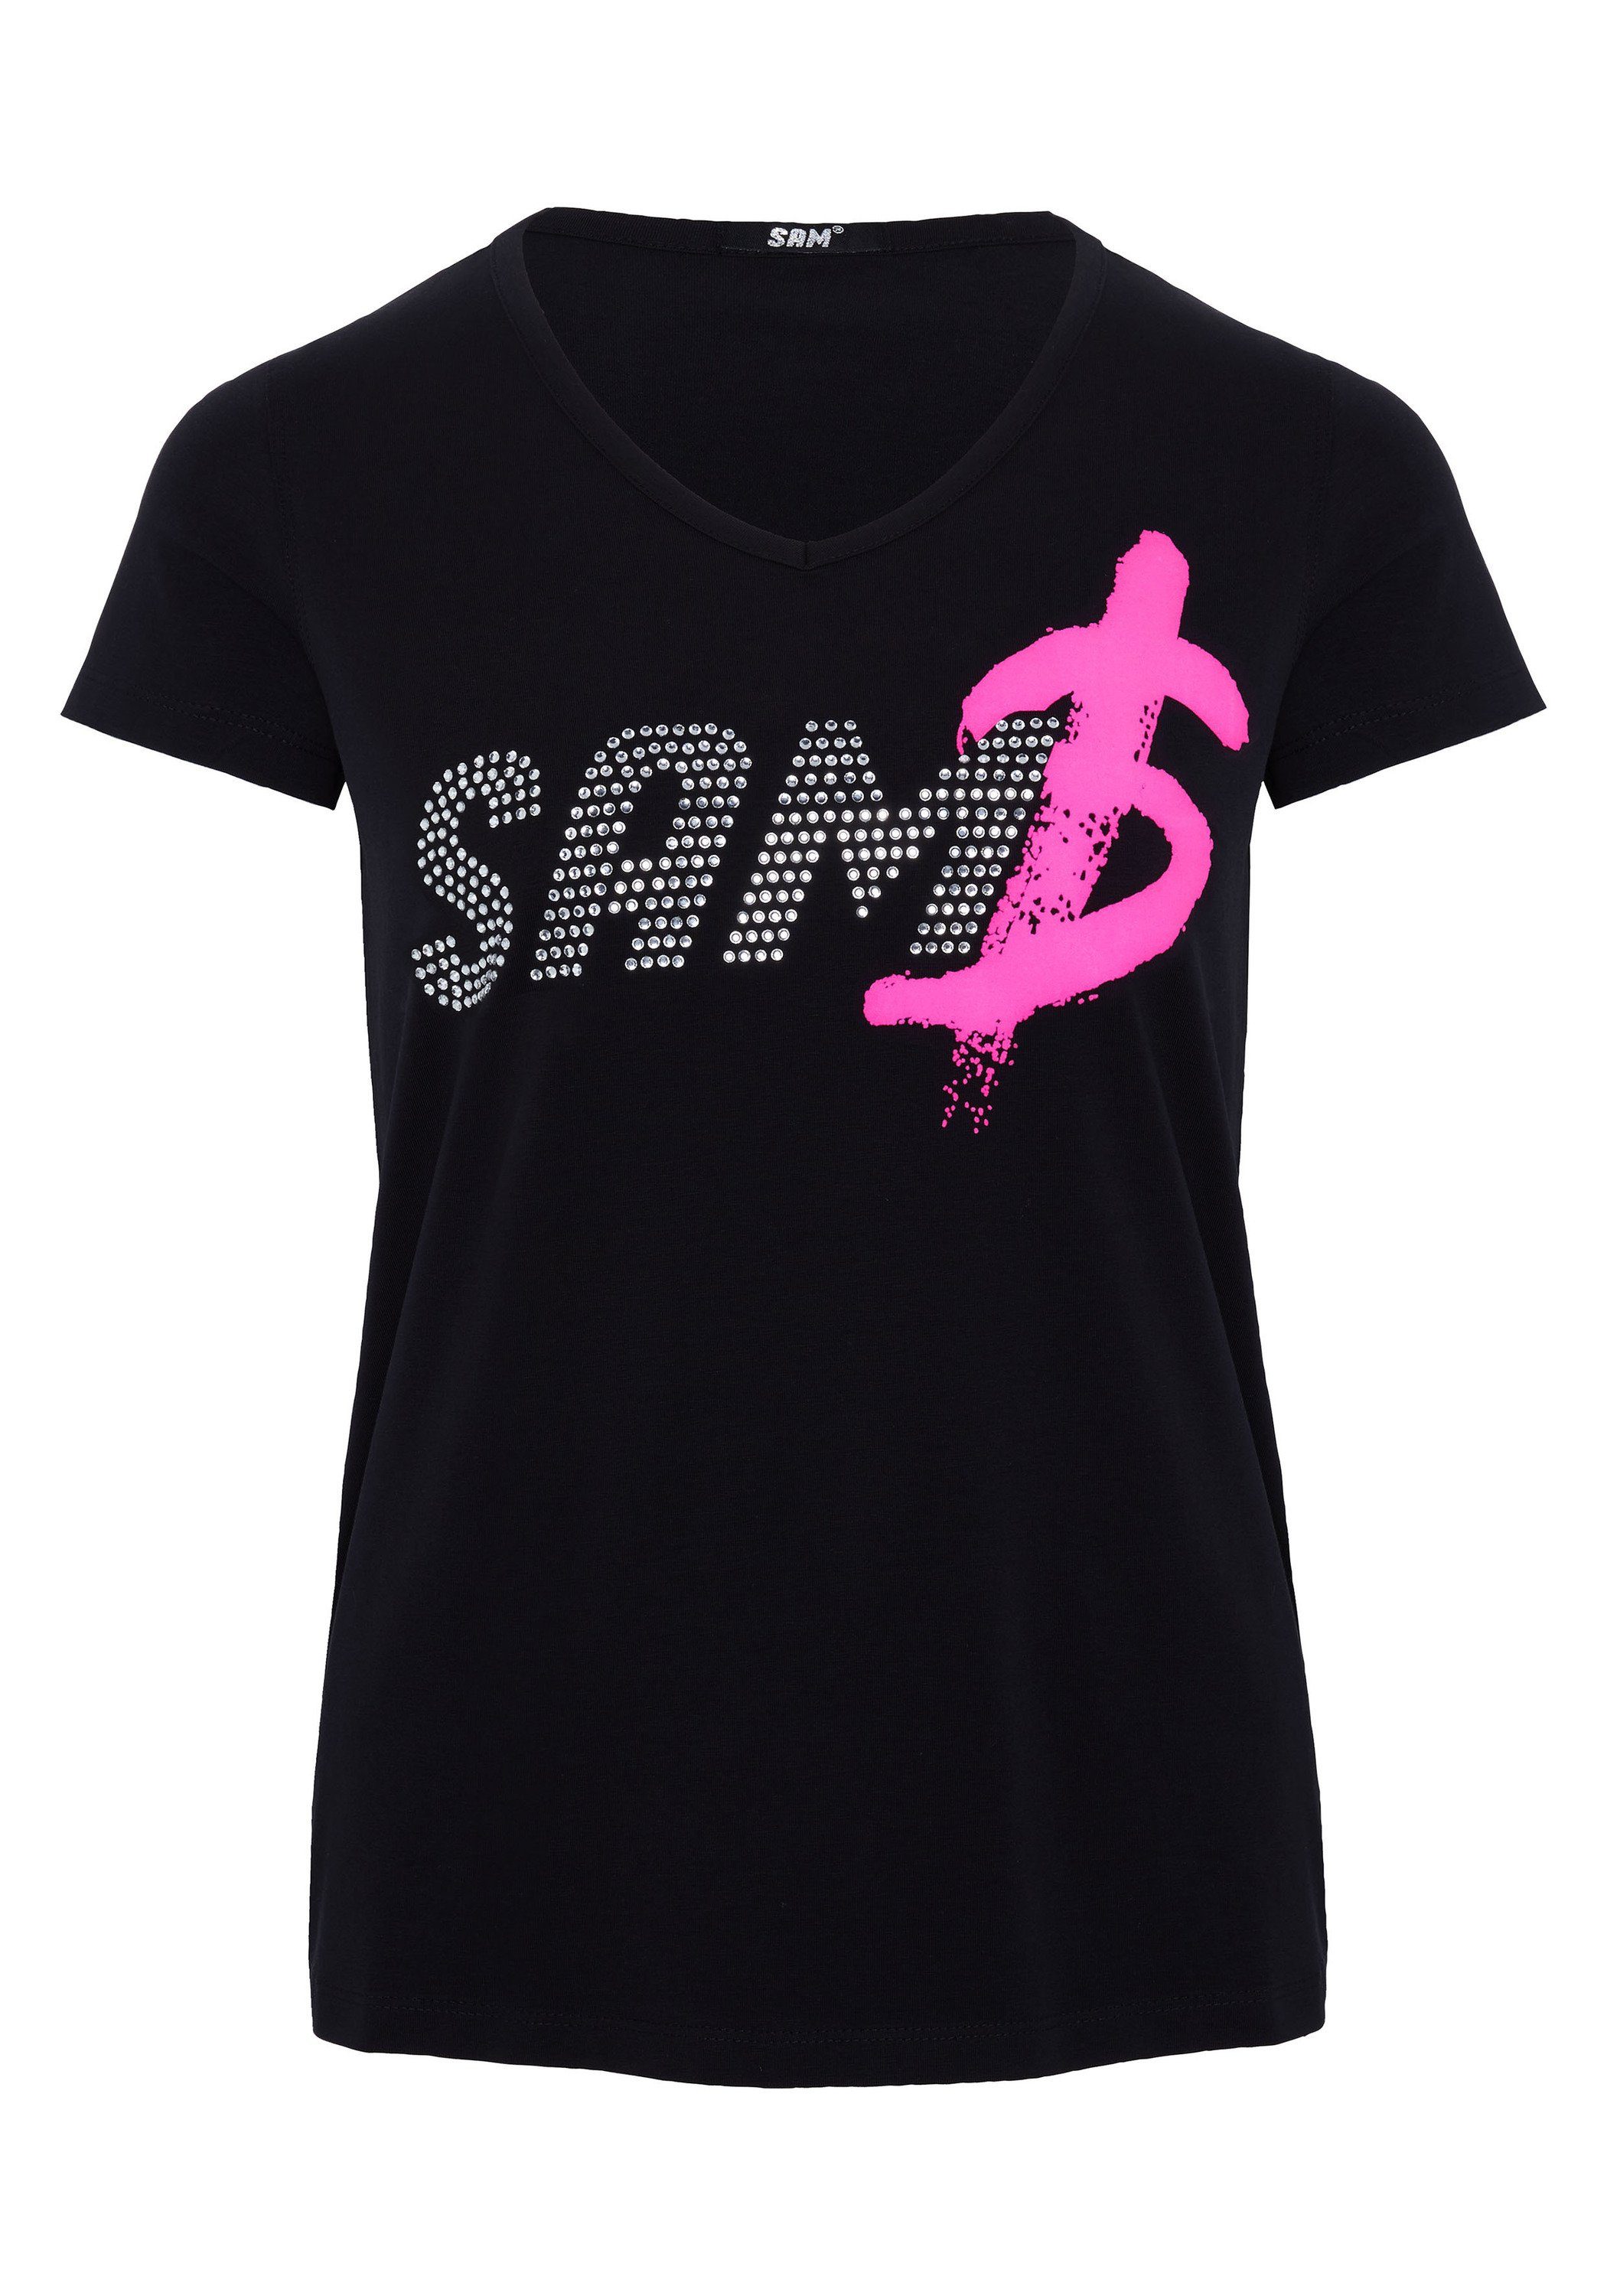 SAM Black mit Deep Print-Shirt 19-3911 Uncle Sam Logodruck